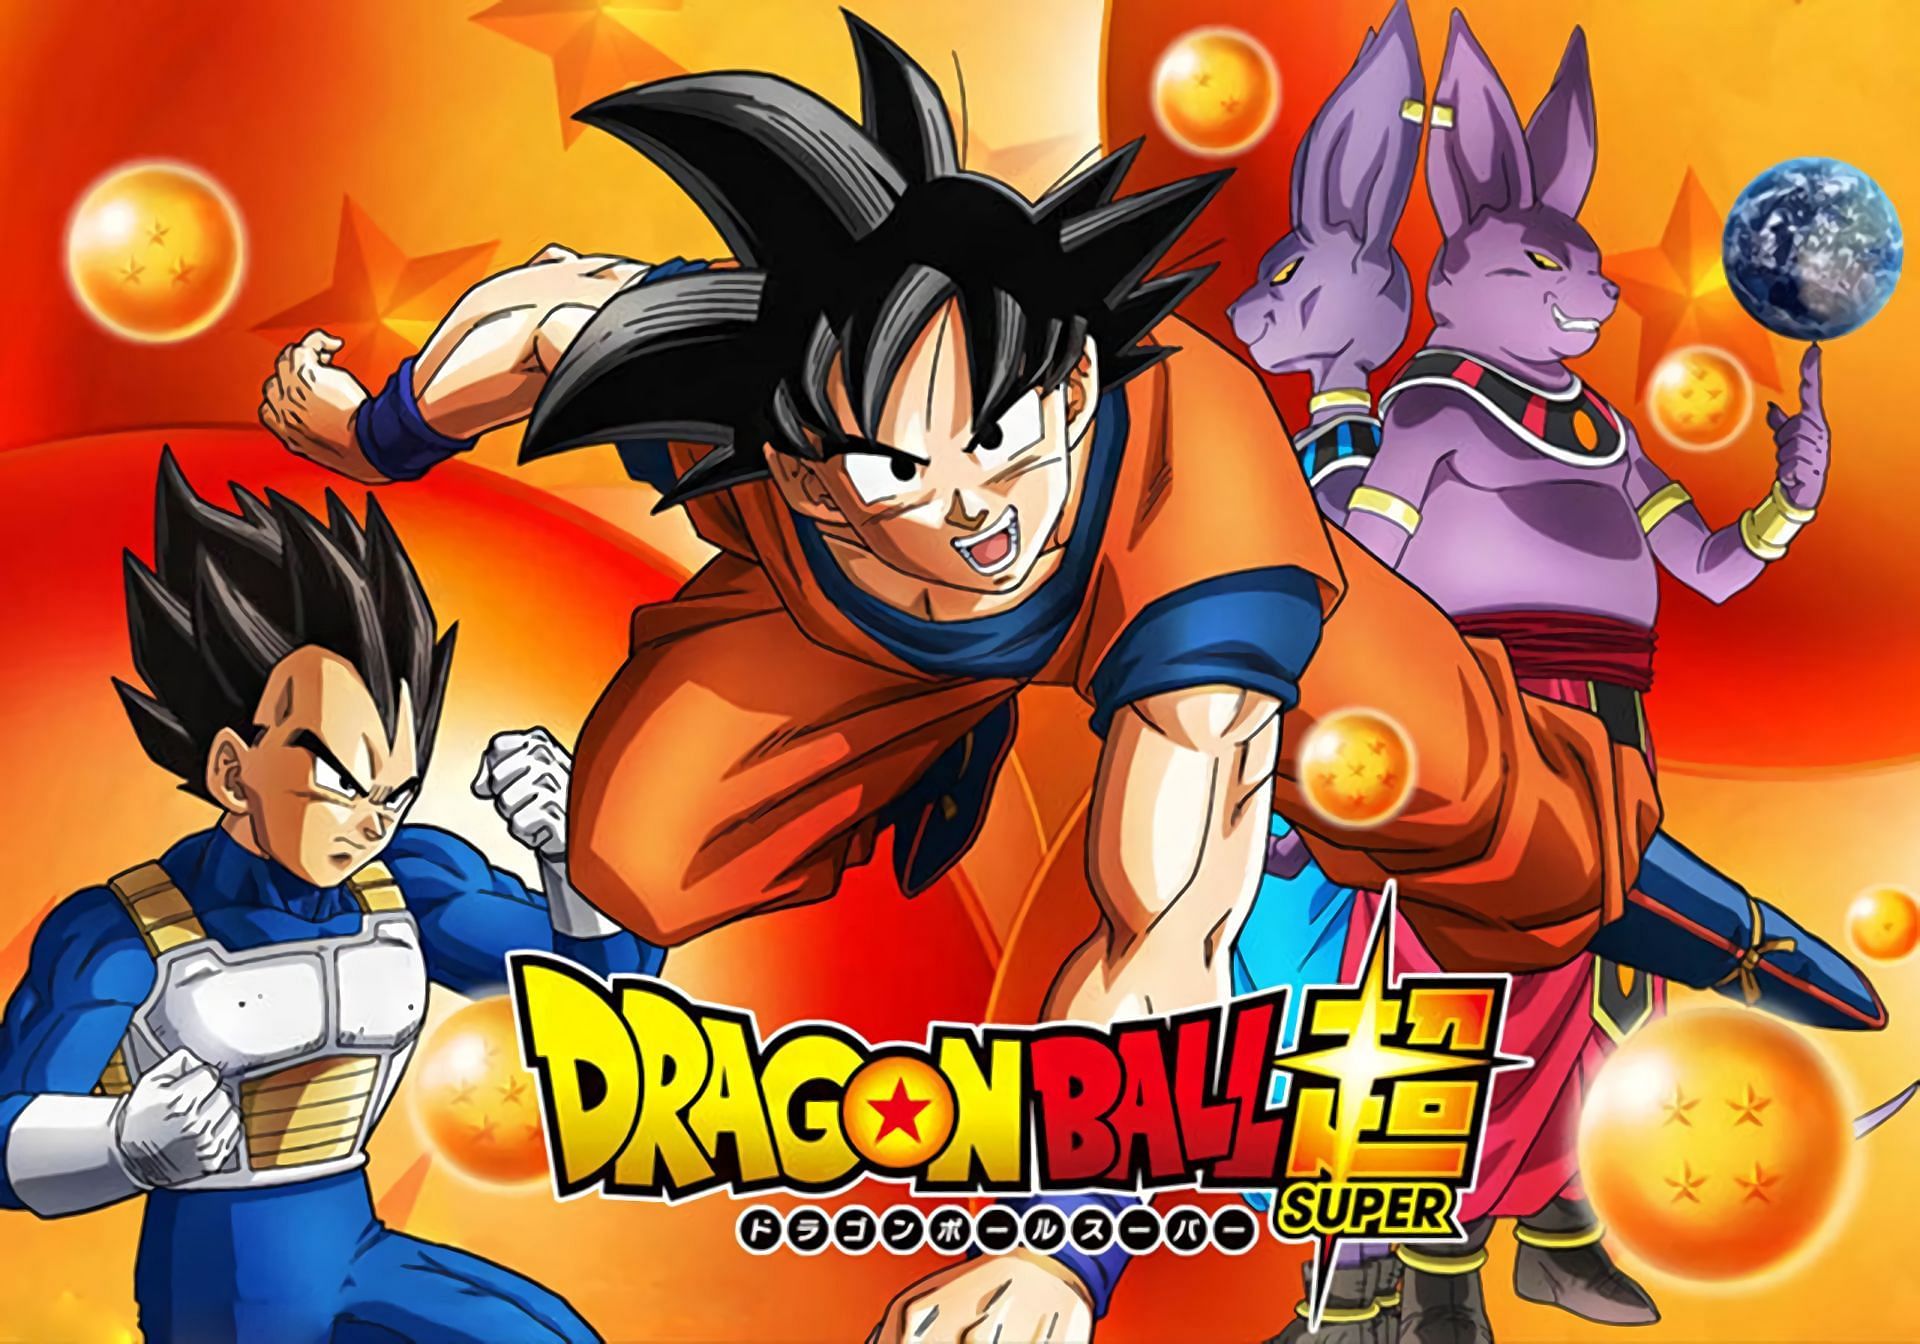 Dragon Ball Super (Image via Toei animation)